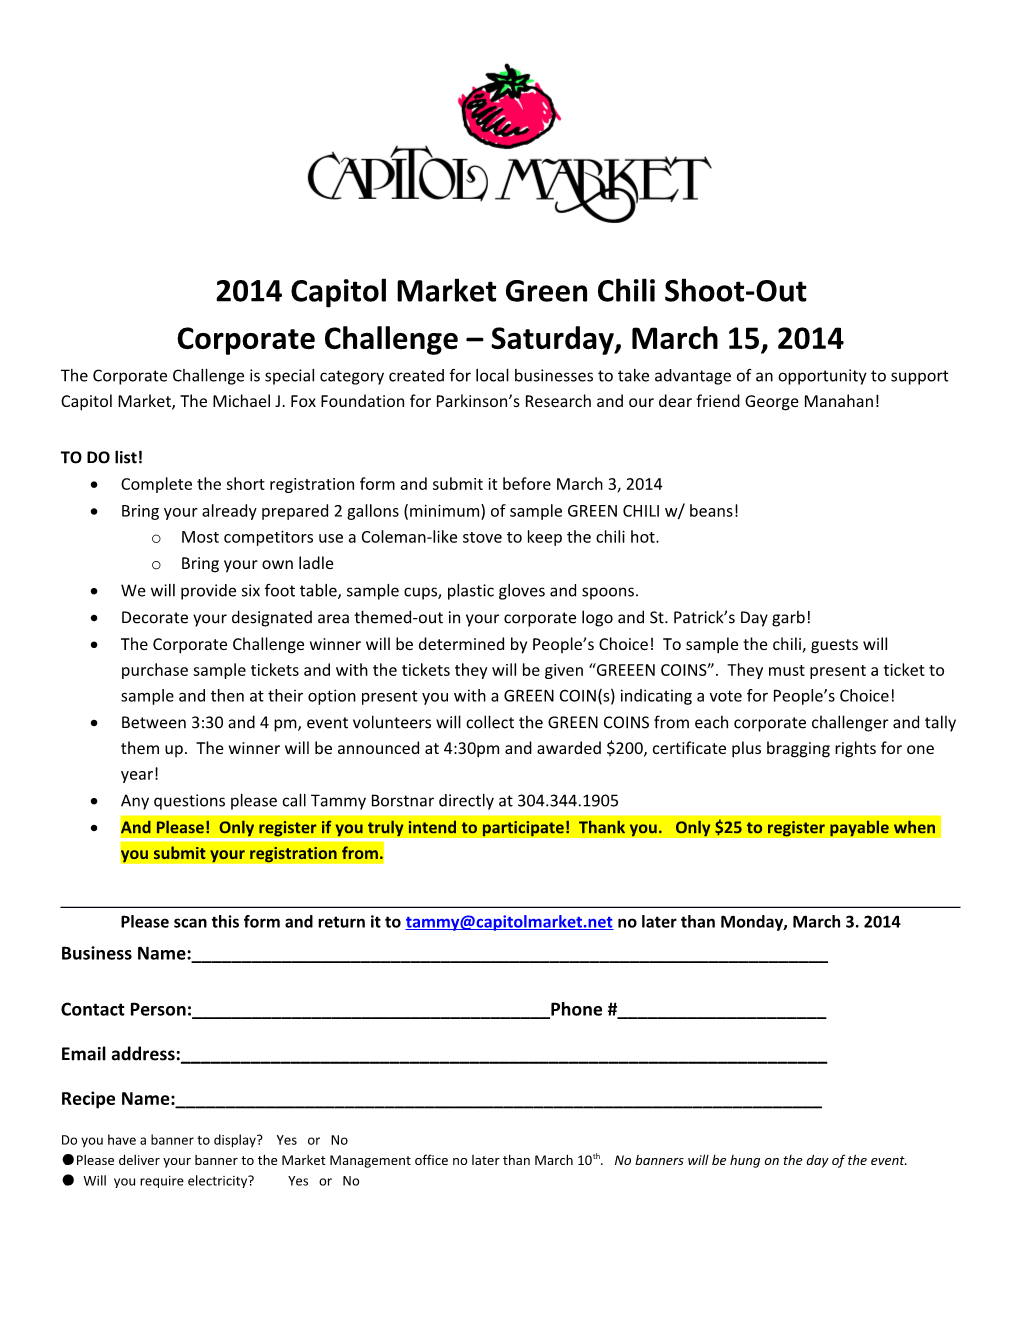 Corporate Challenge Saturday, March 15, 2014